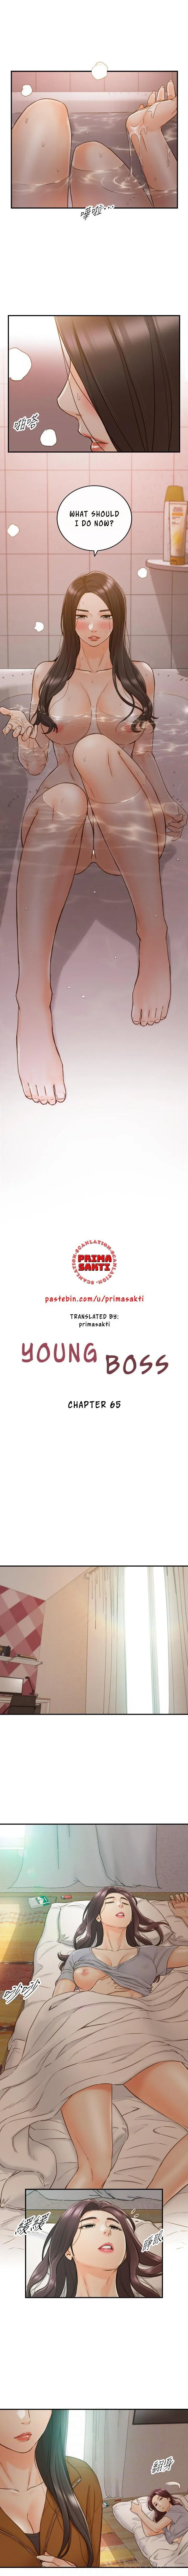 young-boss-001-chap-65-0